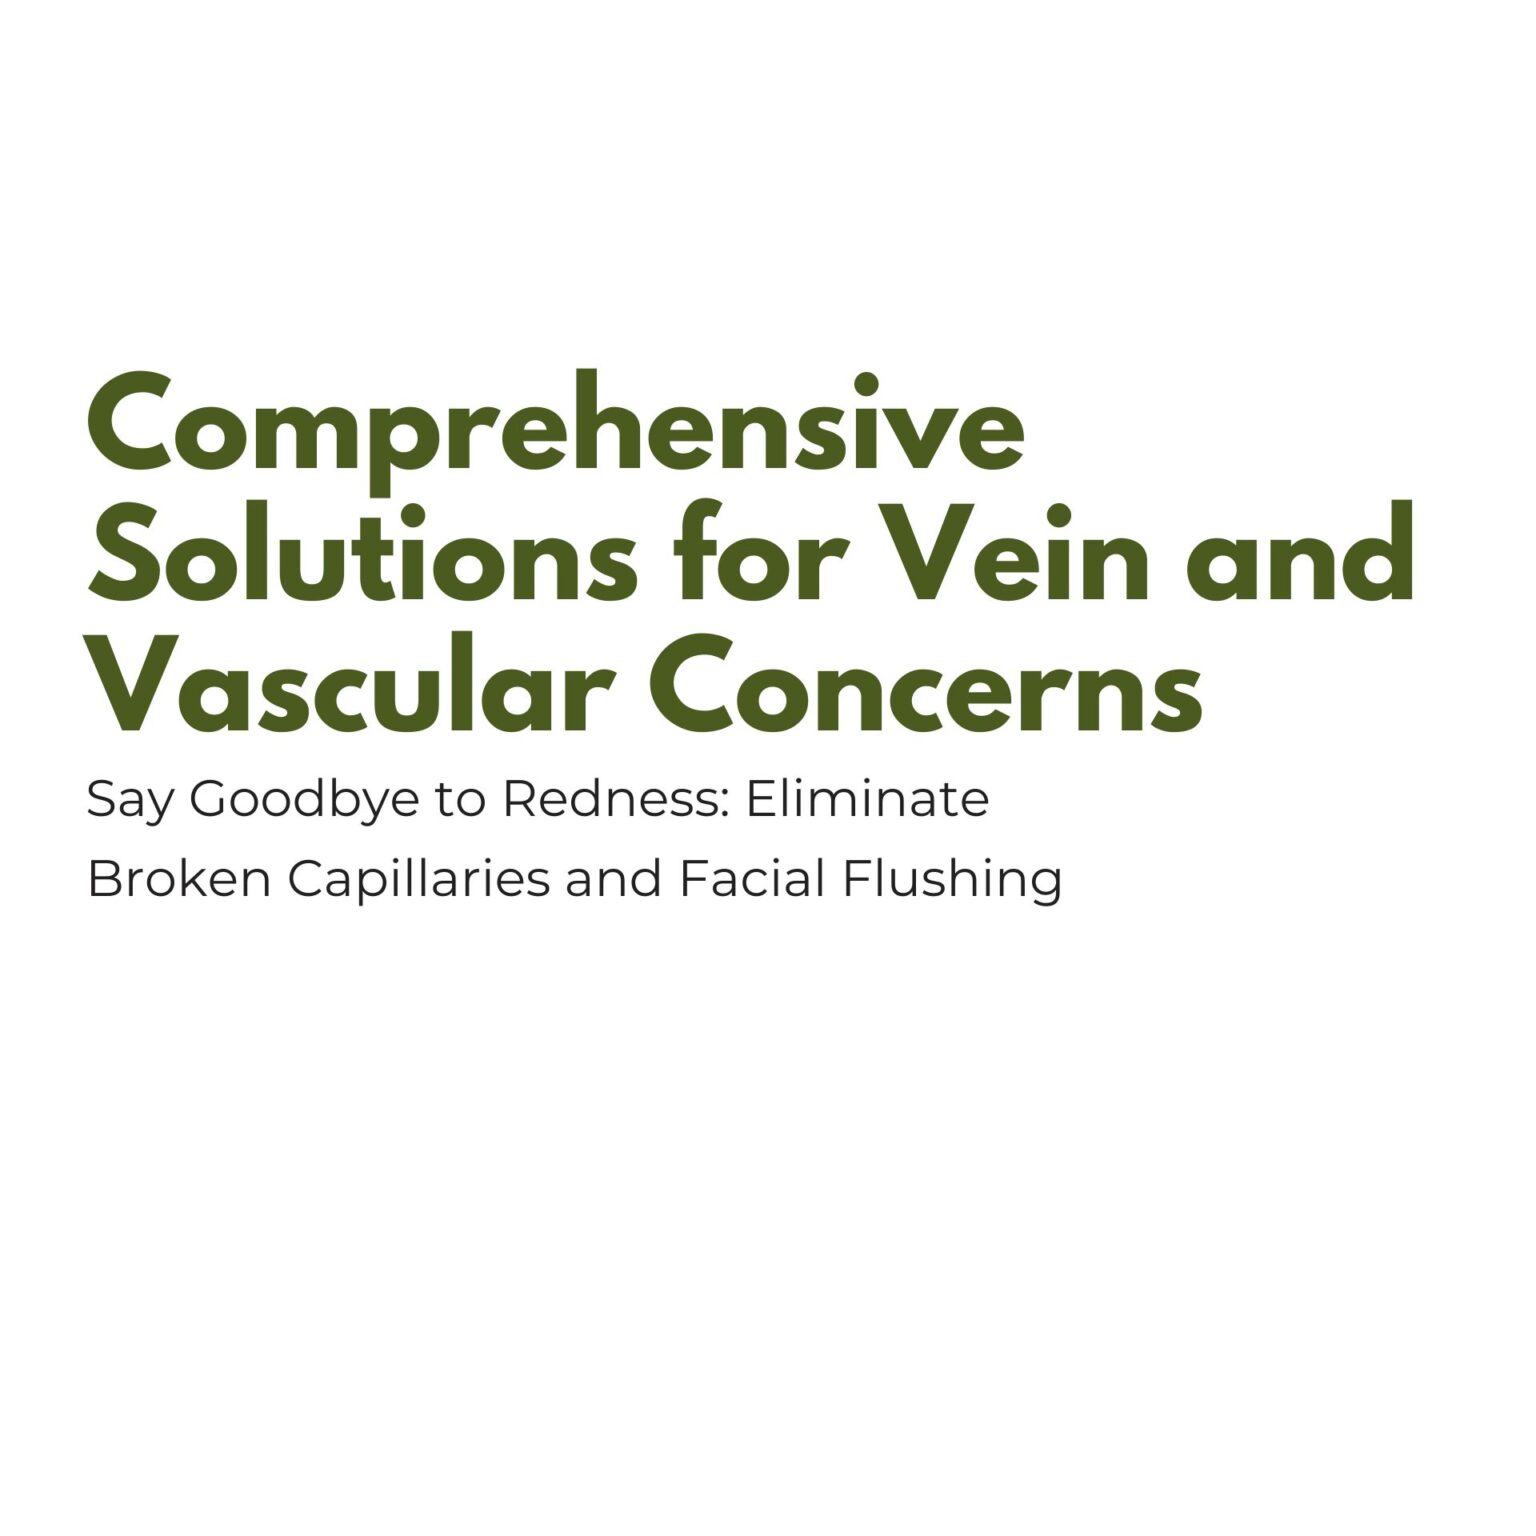 Vein and Vascular.2